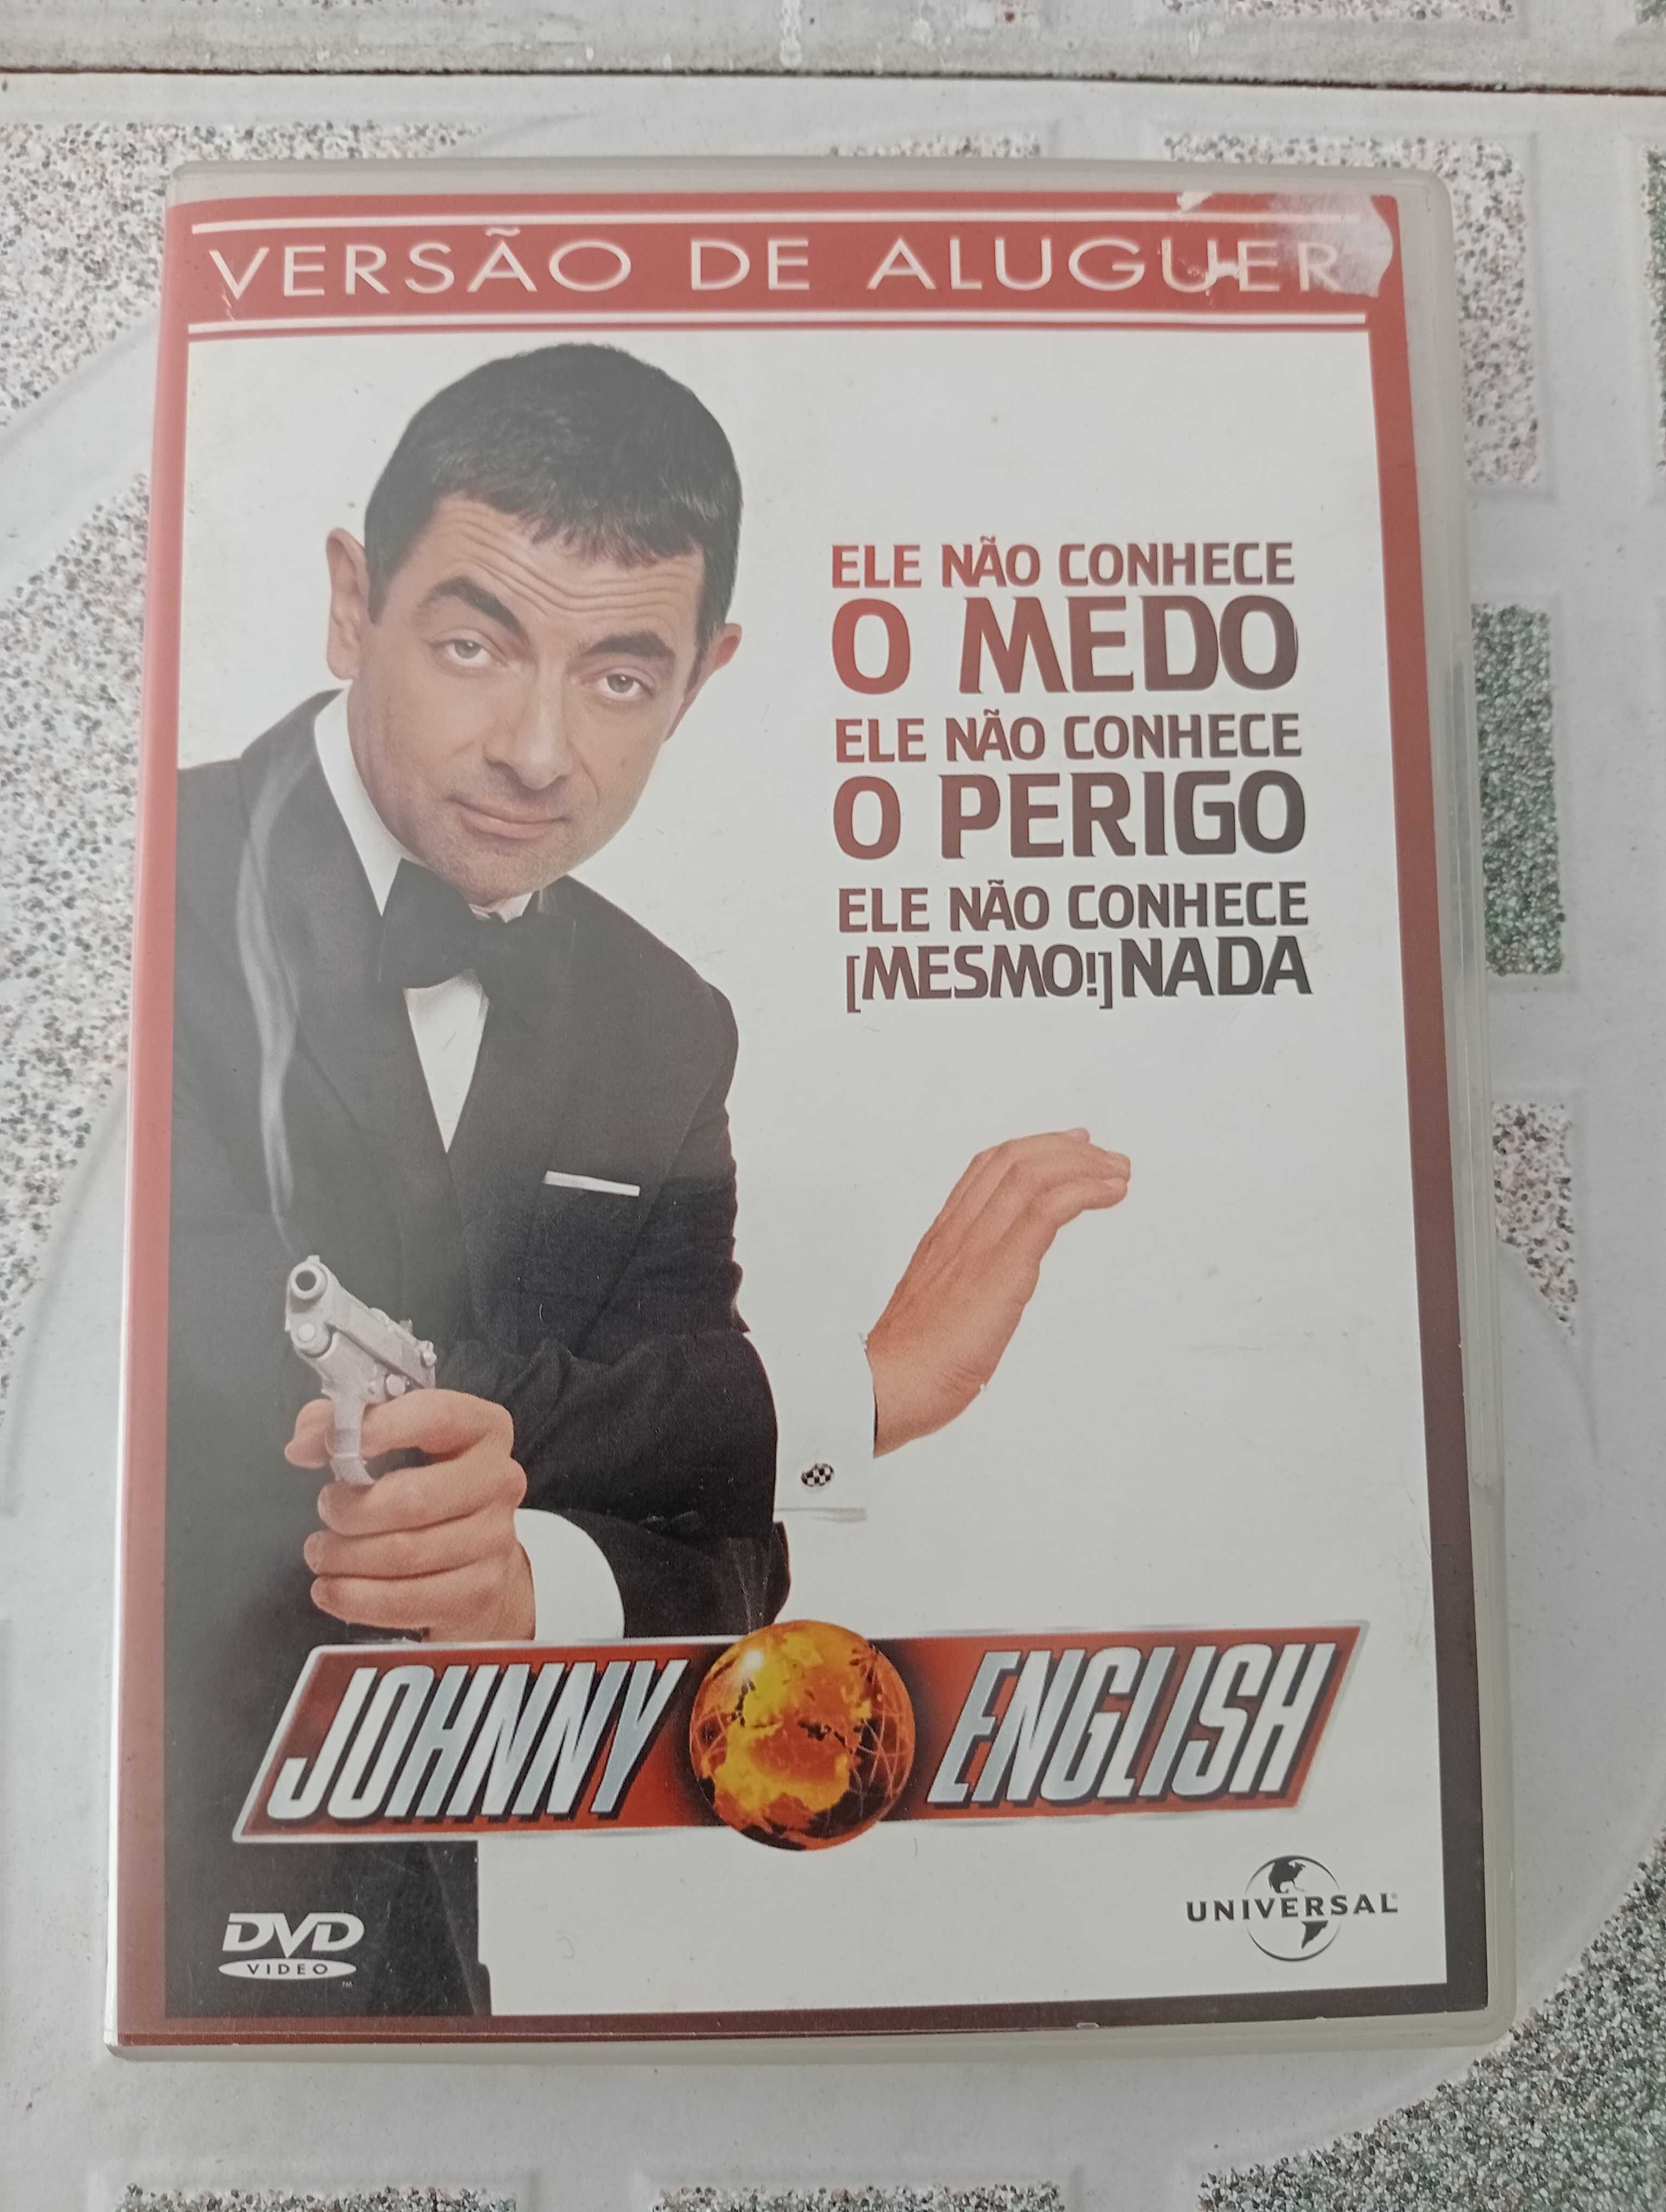 Vendo DVD John English